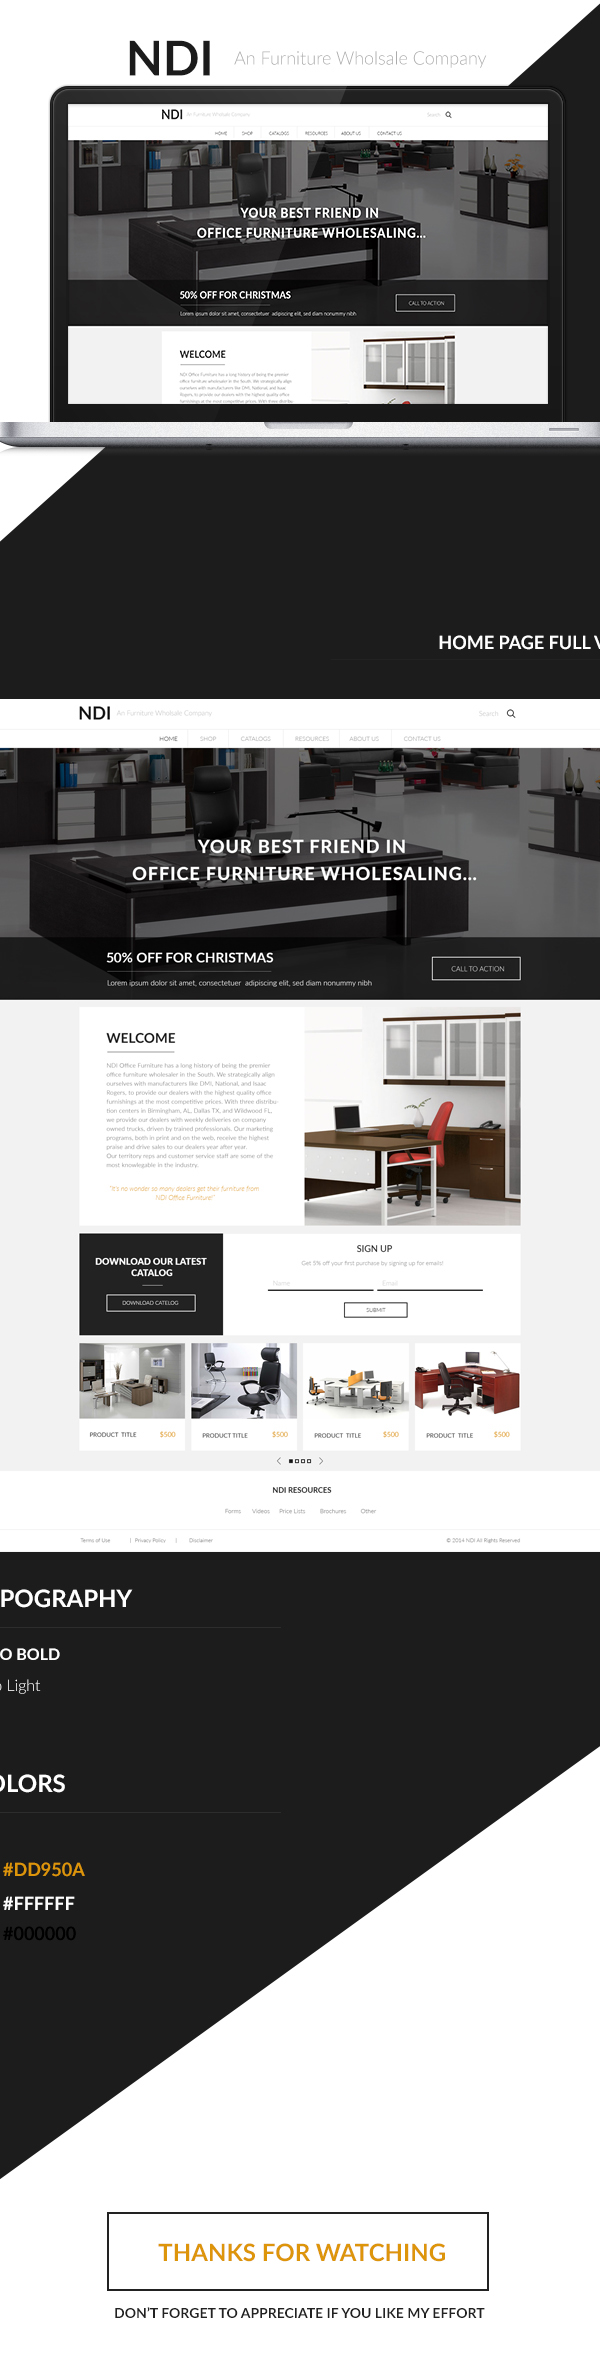 UI ux design Web product business corporate furniture